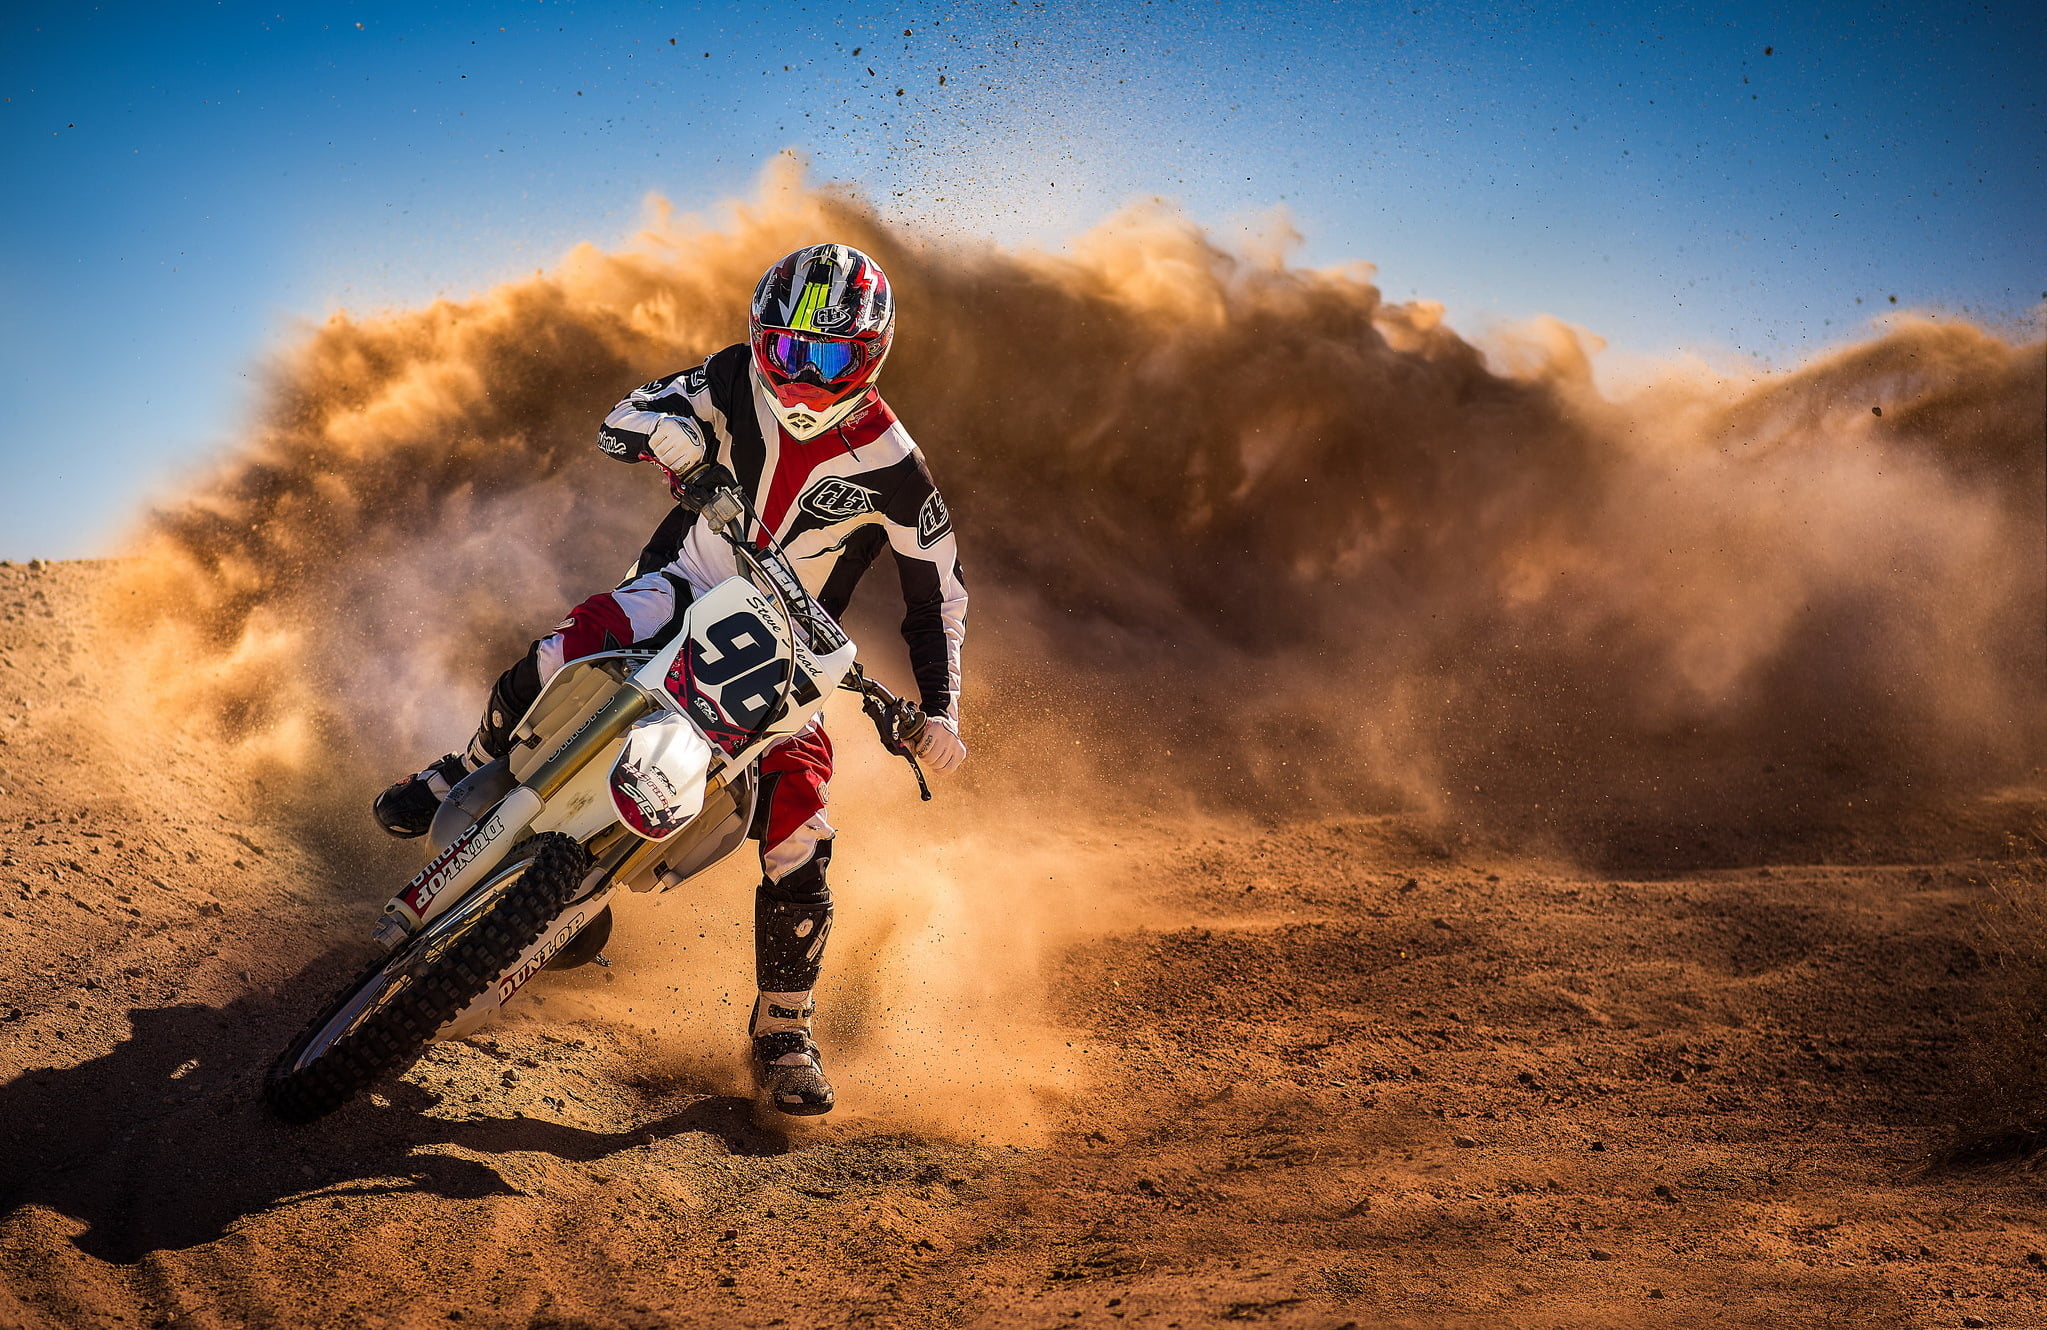 man riding motorcycle digital wallpaper, race, dust, rider, sport